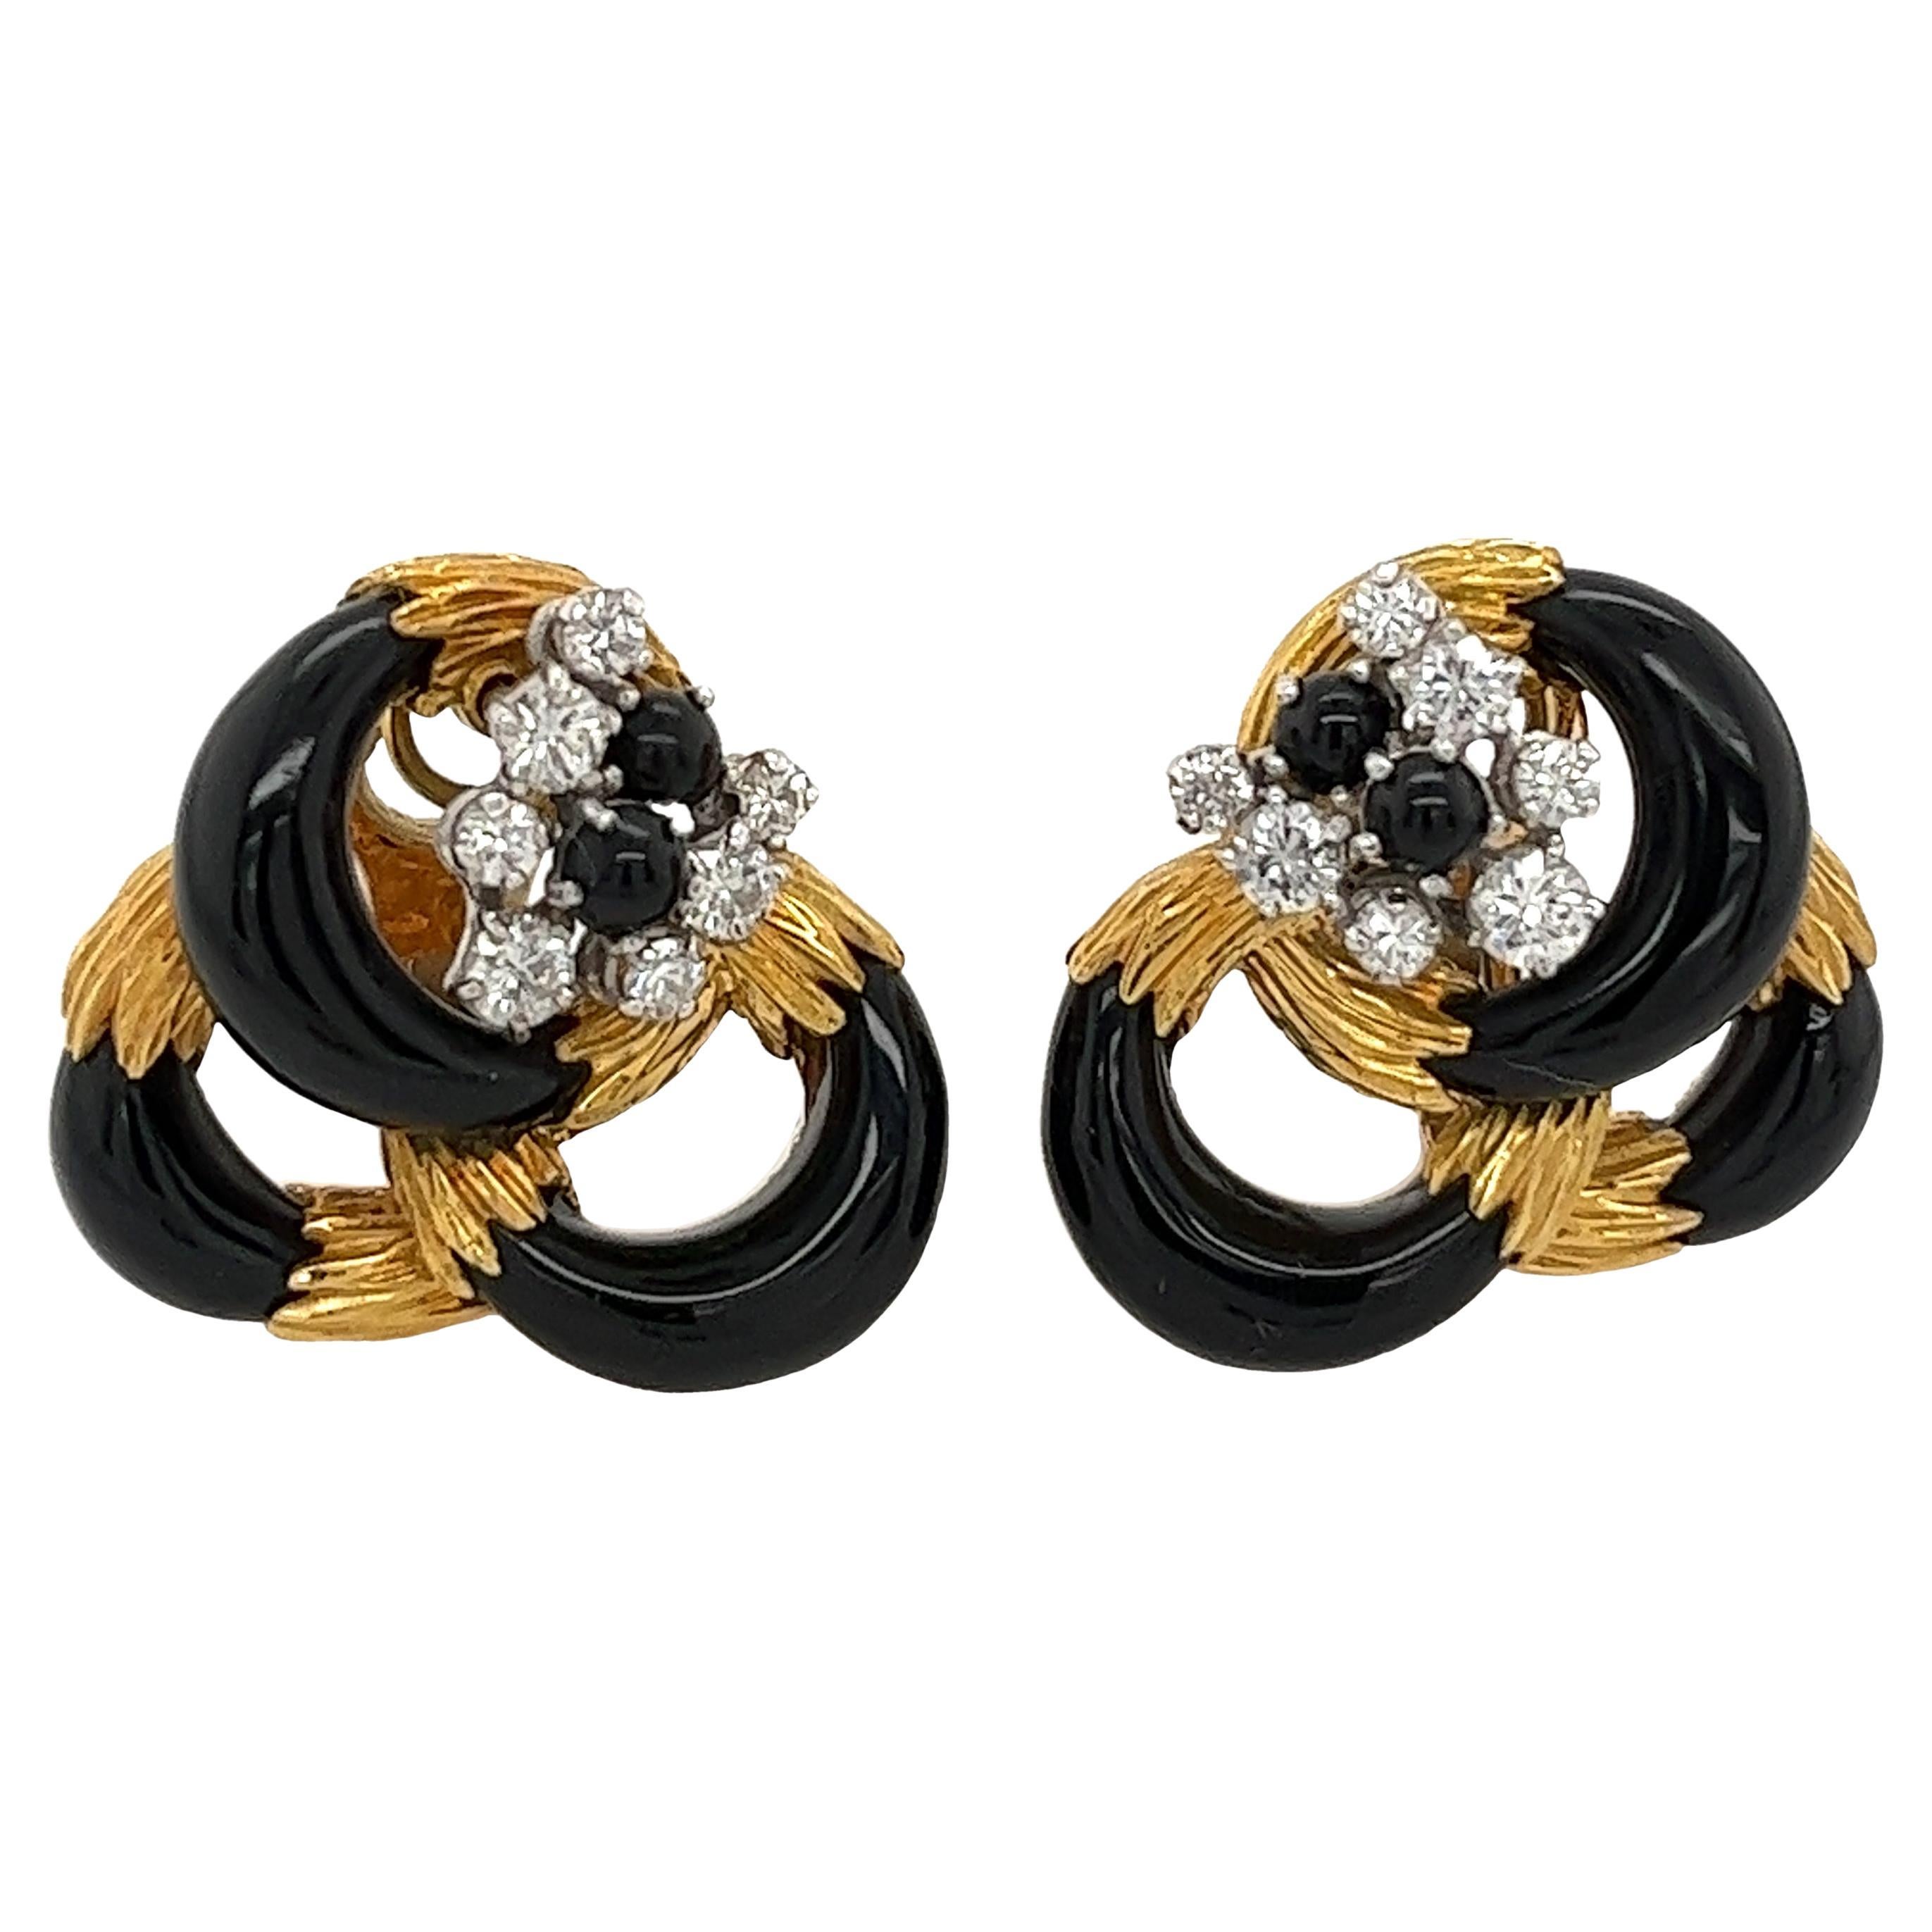 Kutchinsky Vintage Diamond Earrings Black Enamel Set In 18ct Yellow Gold For Sale